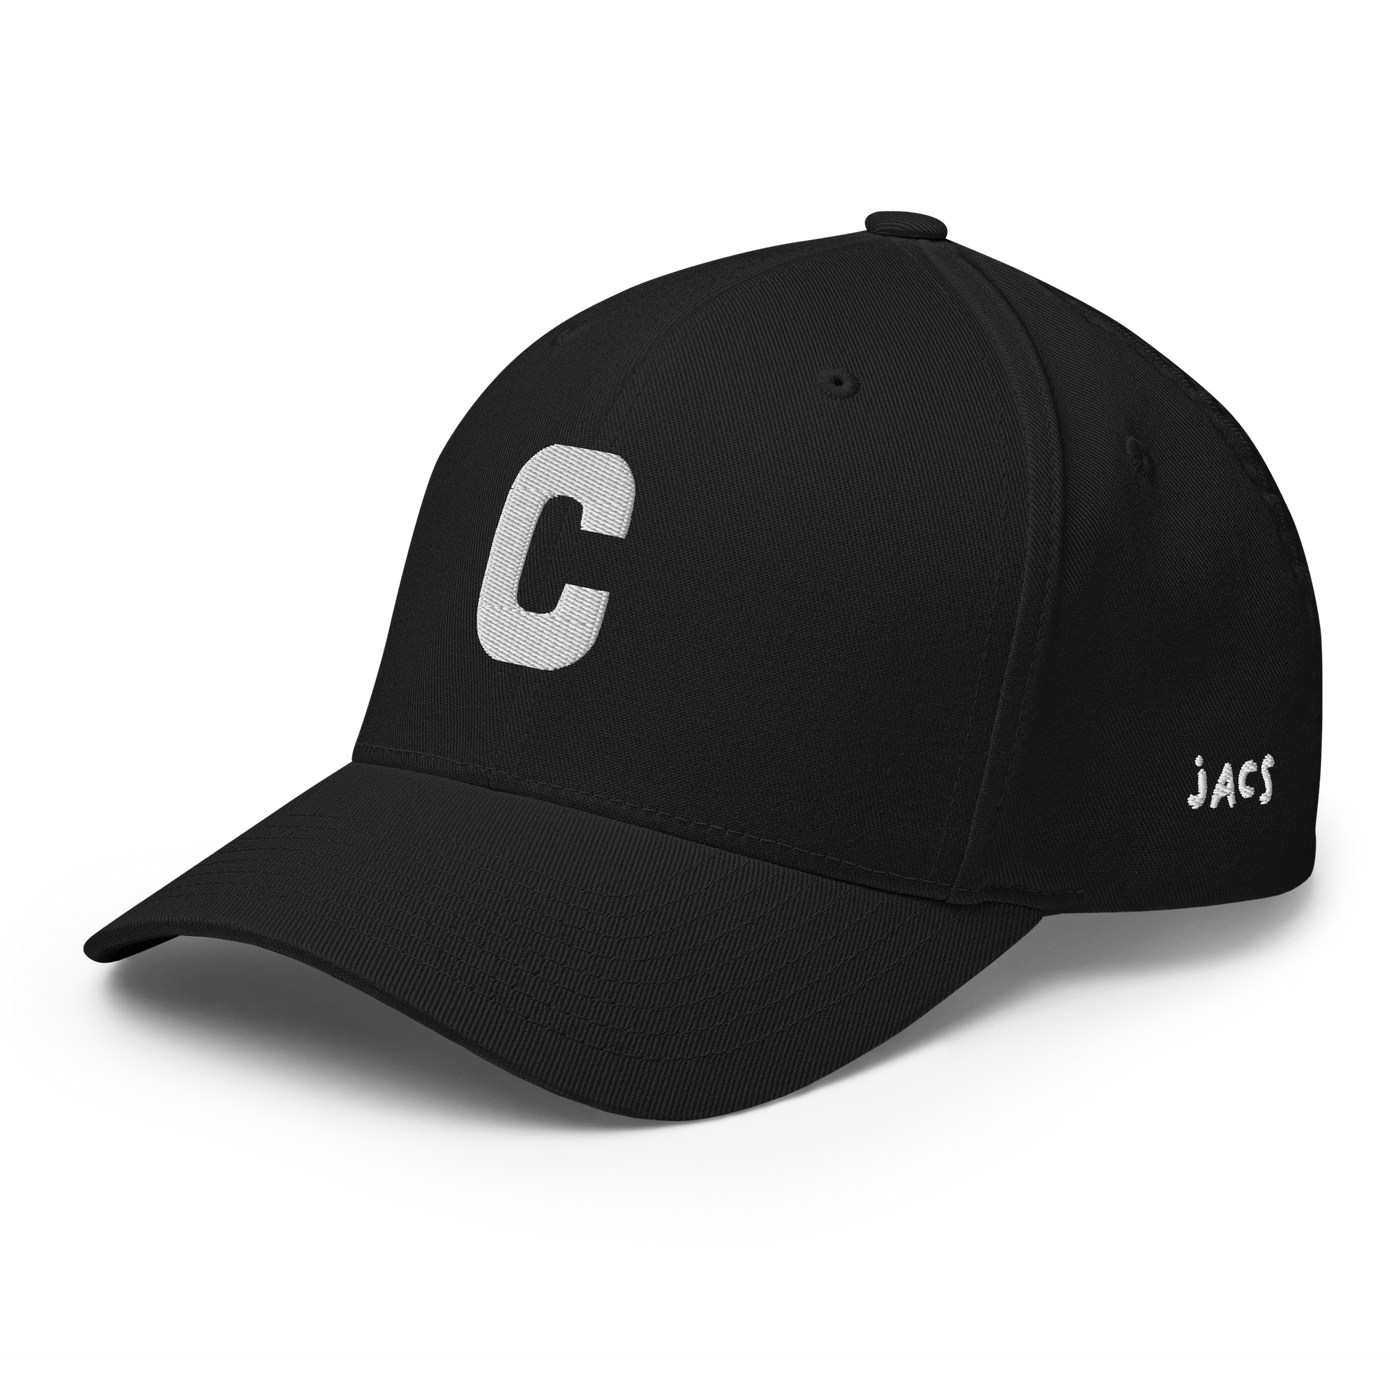 Copenhagen Flexfit - S/M - - Just Another Cap Store